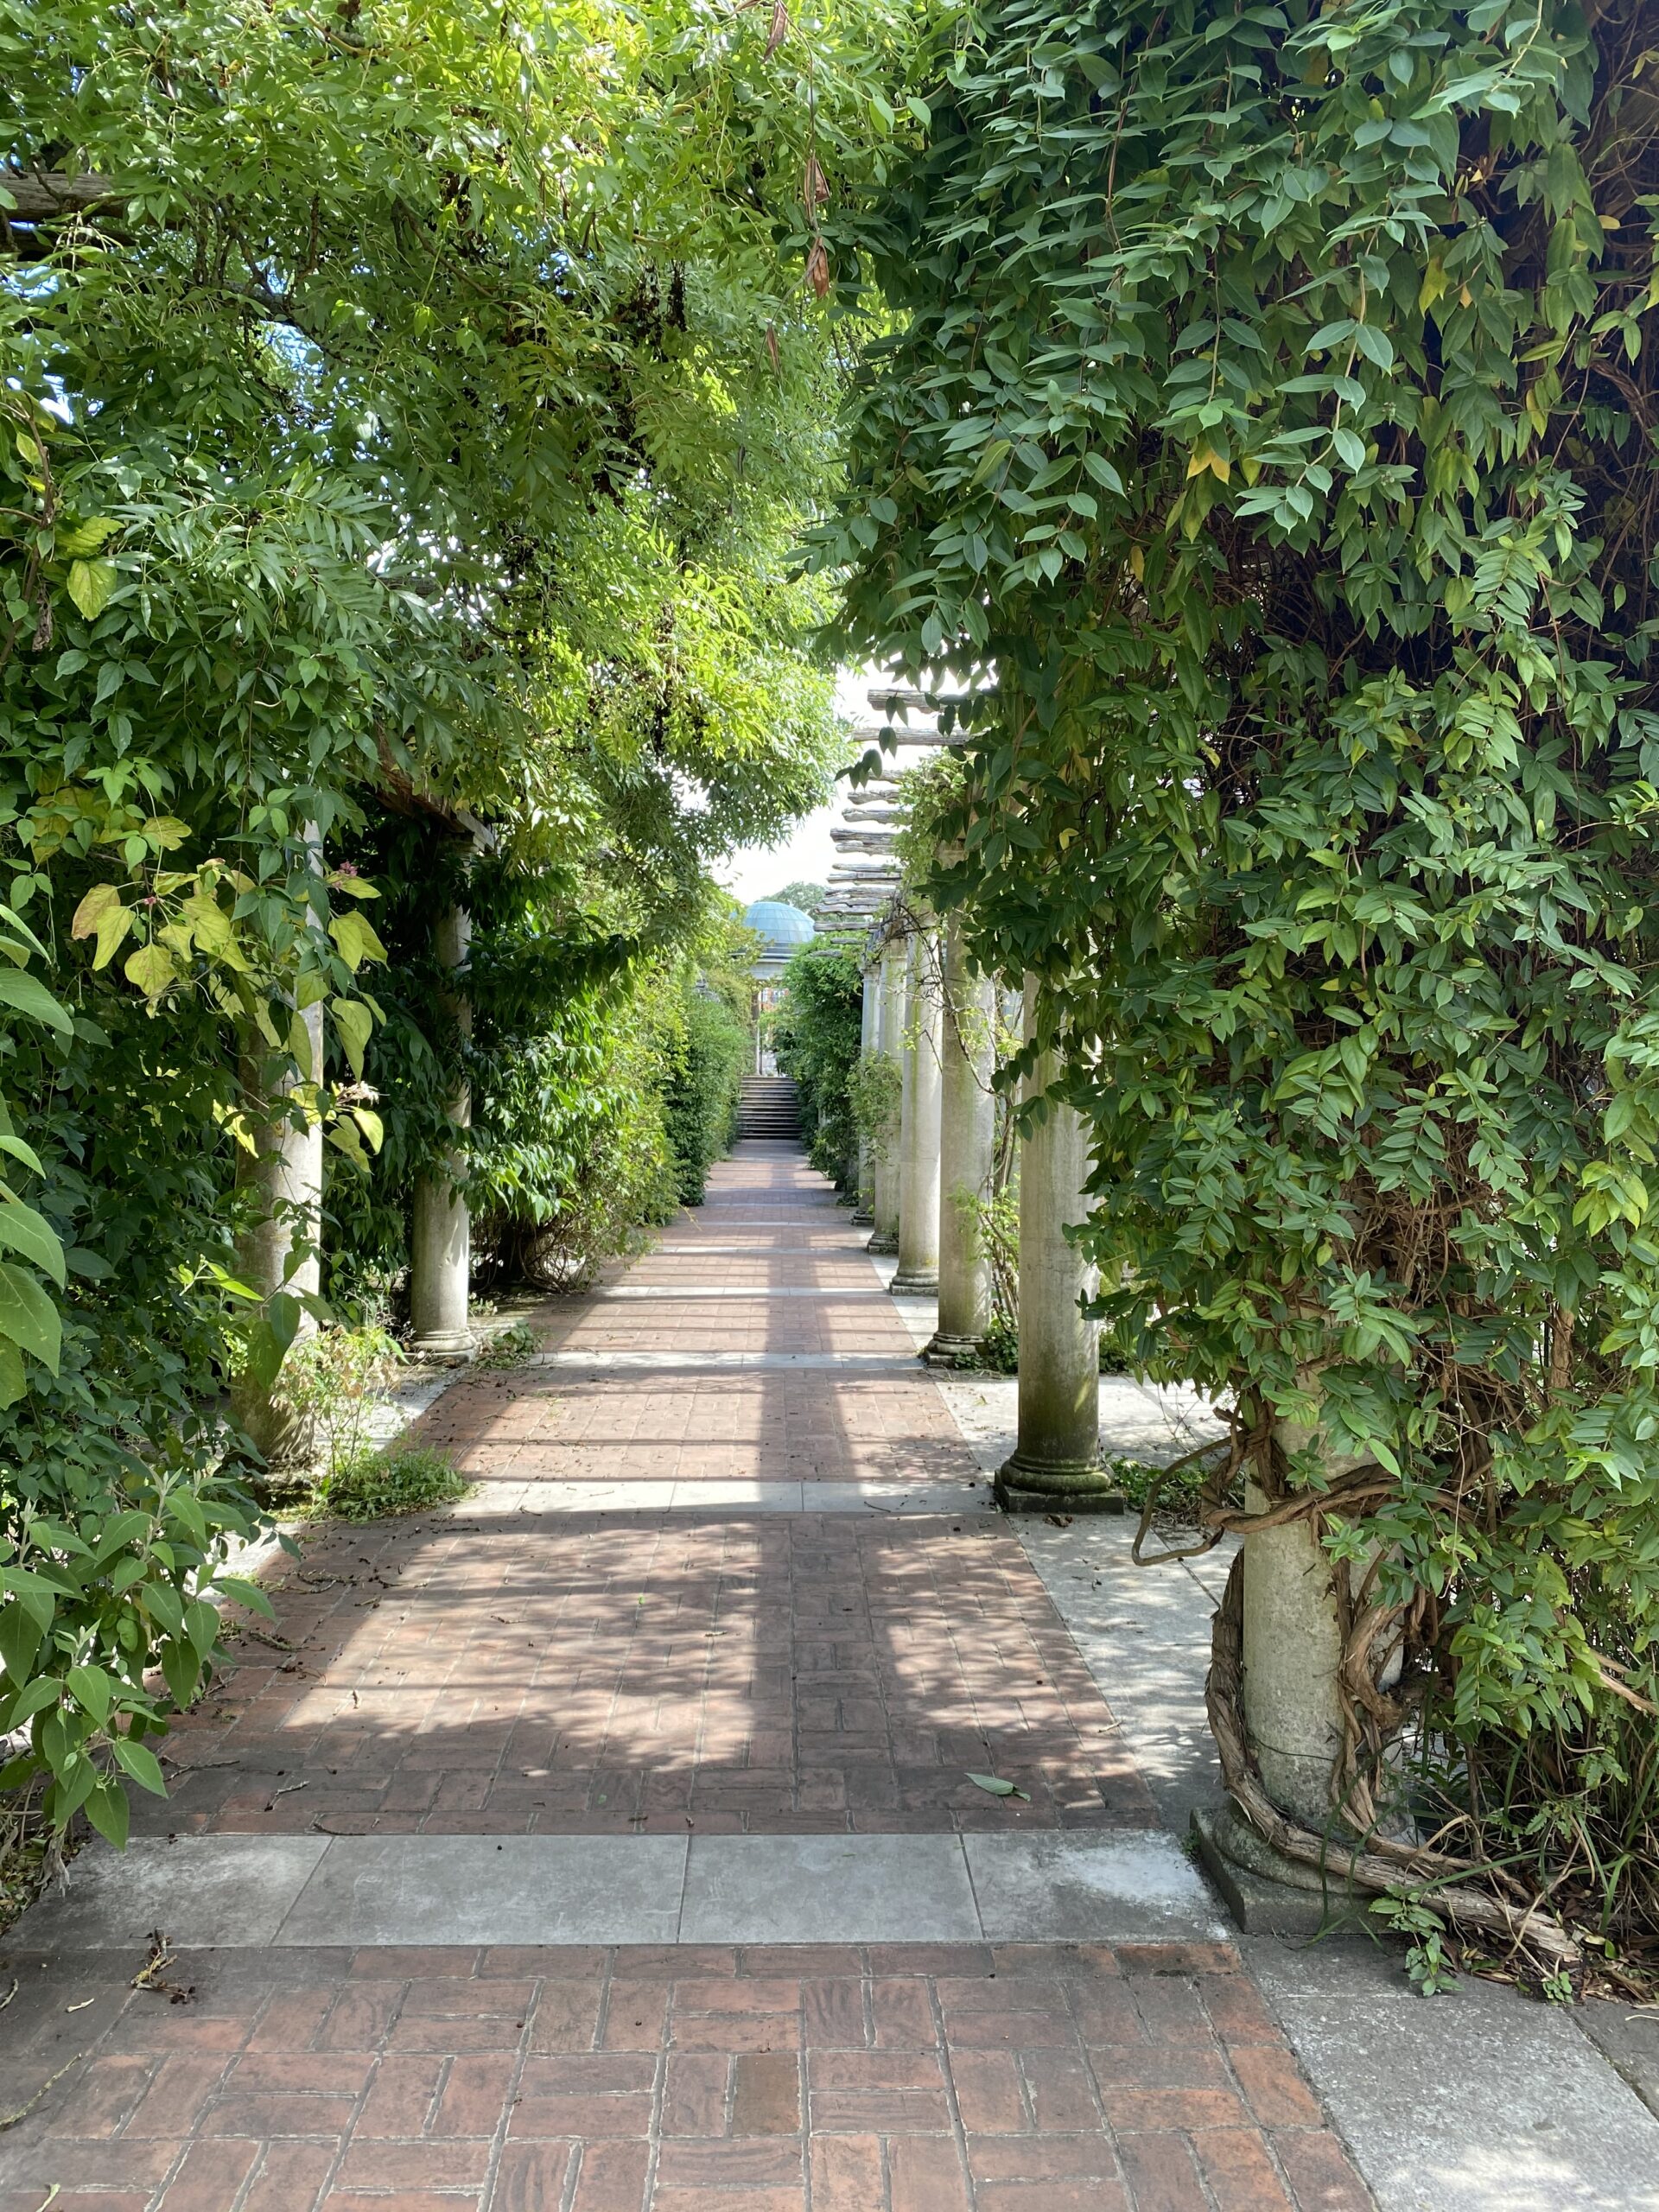 hampstead hill garden and pergola -10 Hidden Gems in London - Lifewithbugo